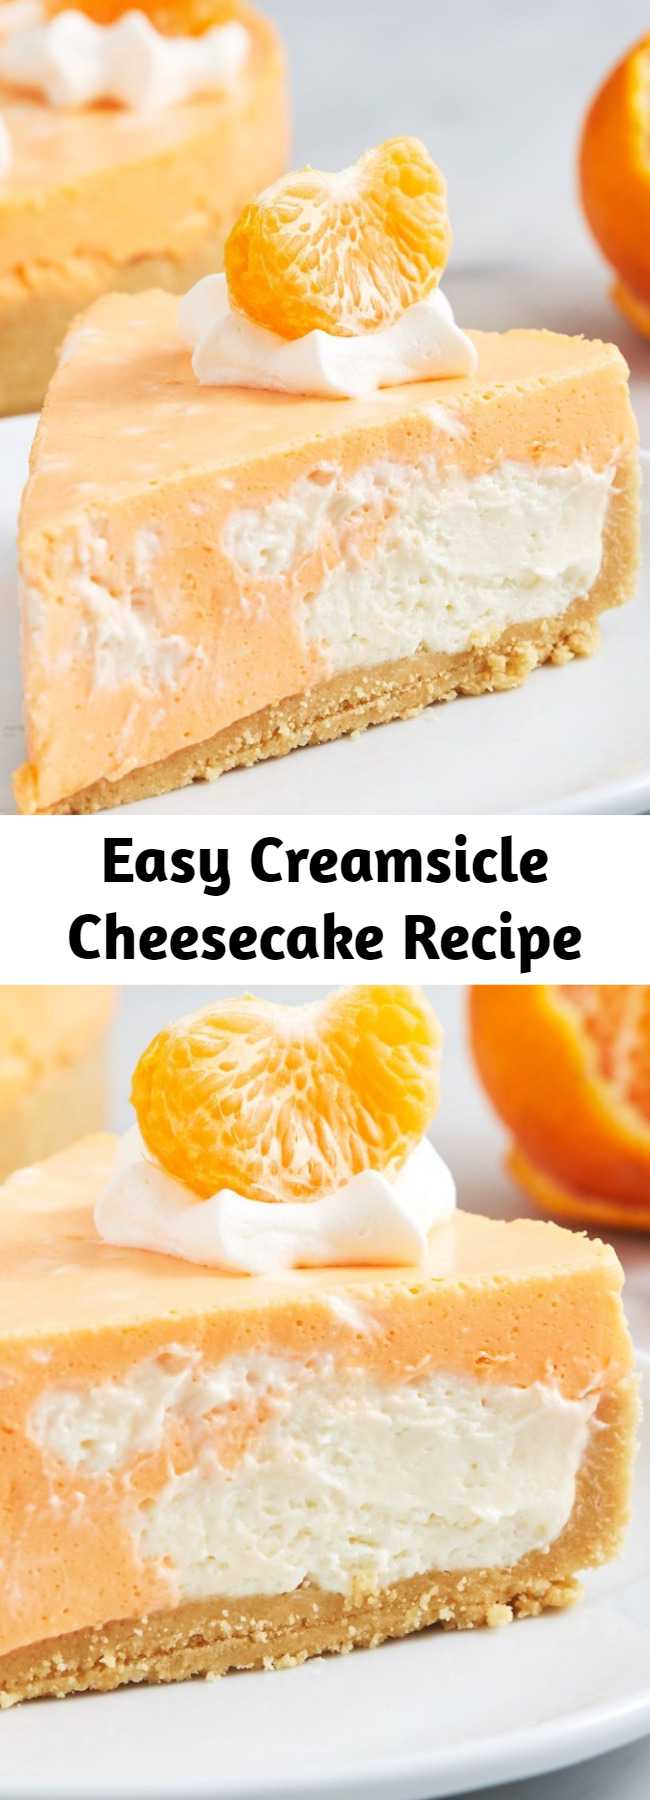 Easy Creamsicle Cheesecake Recipe - This no-bake Creamsicle Cheesecake is perfect for hot summer days.